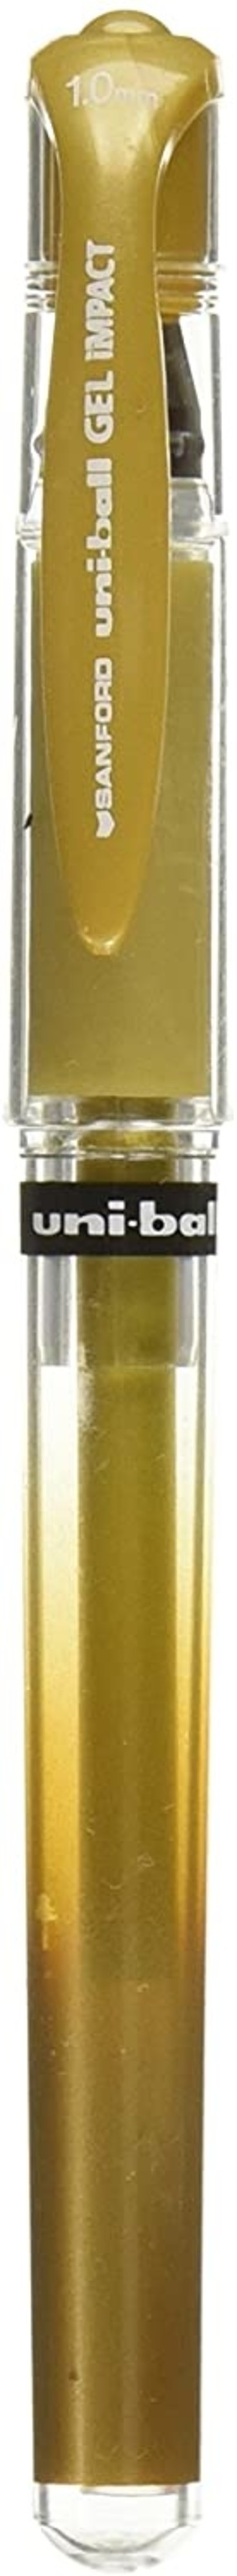 UNIBALL GEL IMPACT GOLD U - Wonder Fair Home Shopping Network